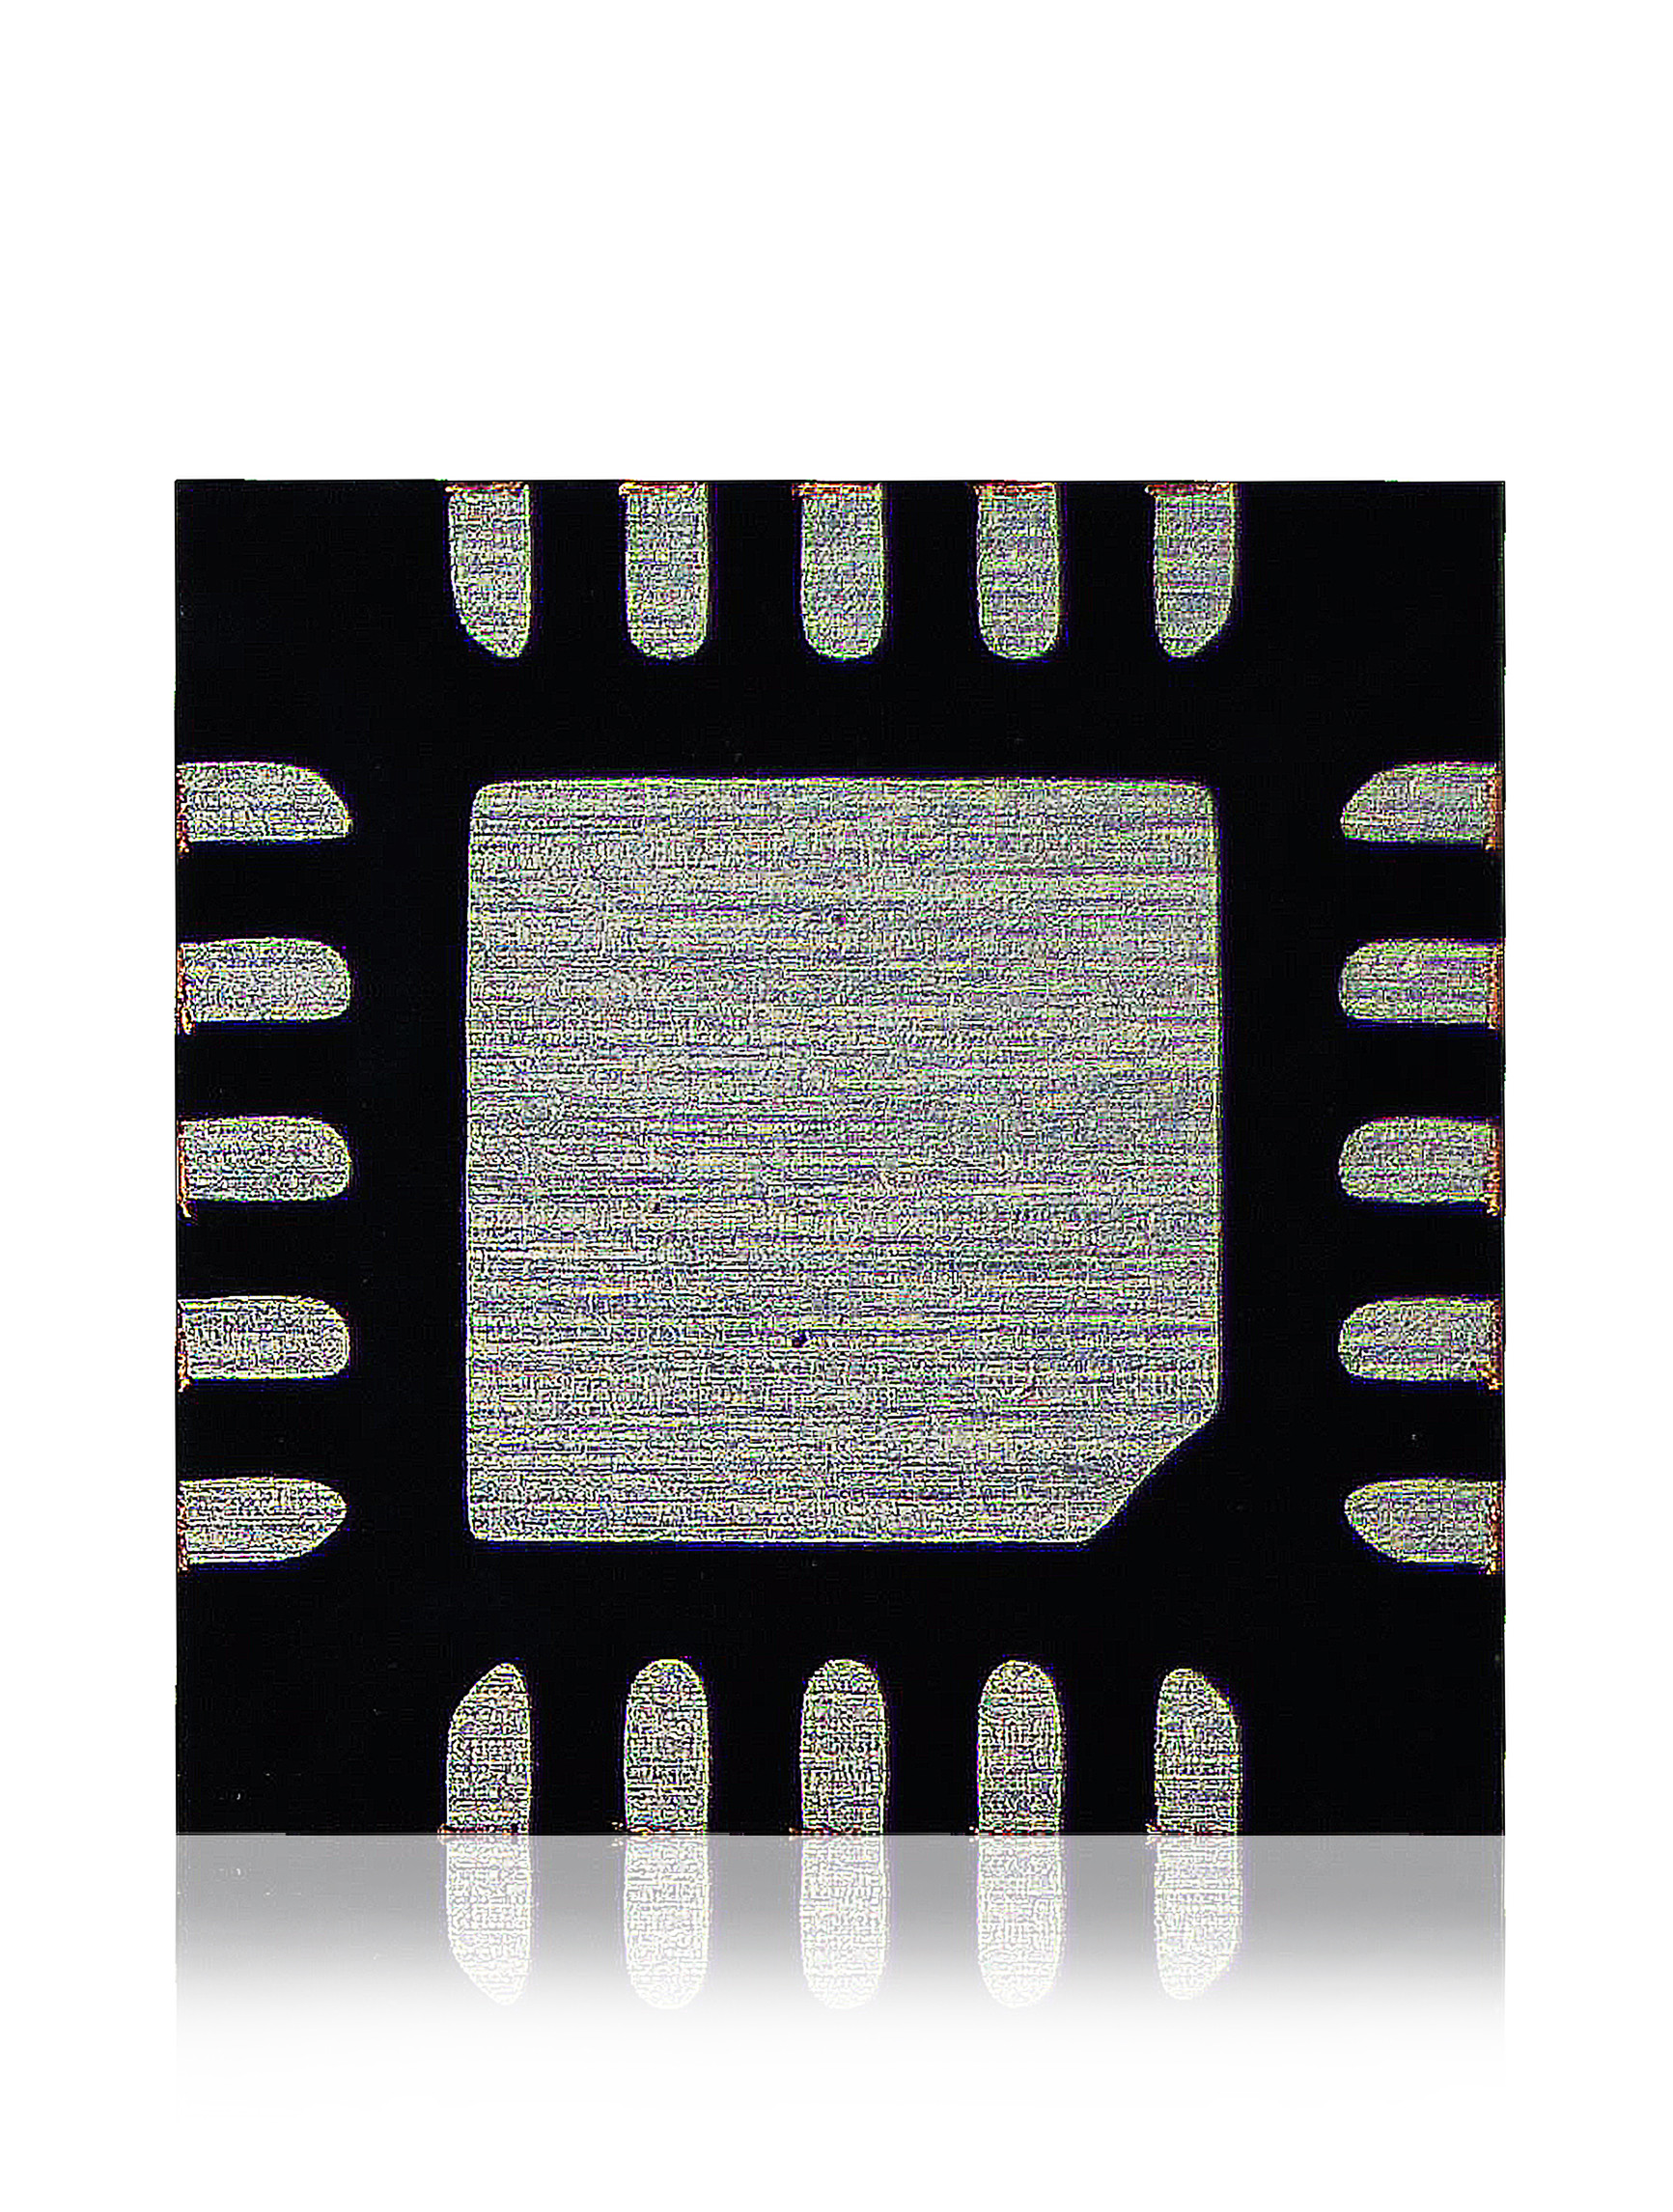 Apple MacBook Retina 12 Inch - A1534 Multiplexer Switch IC Chip - PI3DBS3224: 820-00145 / 820-00244 / U4450: QFN-32 PIN